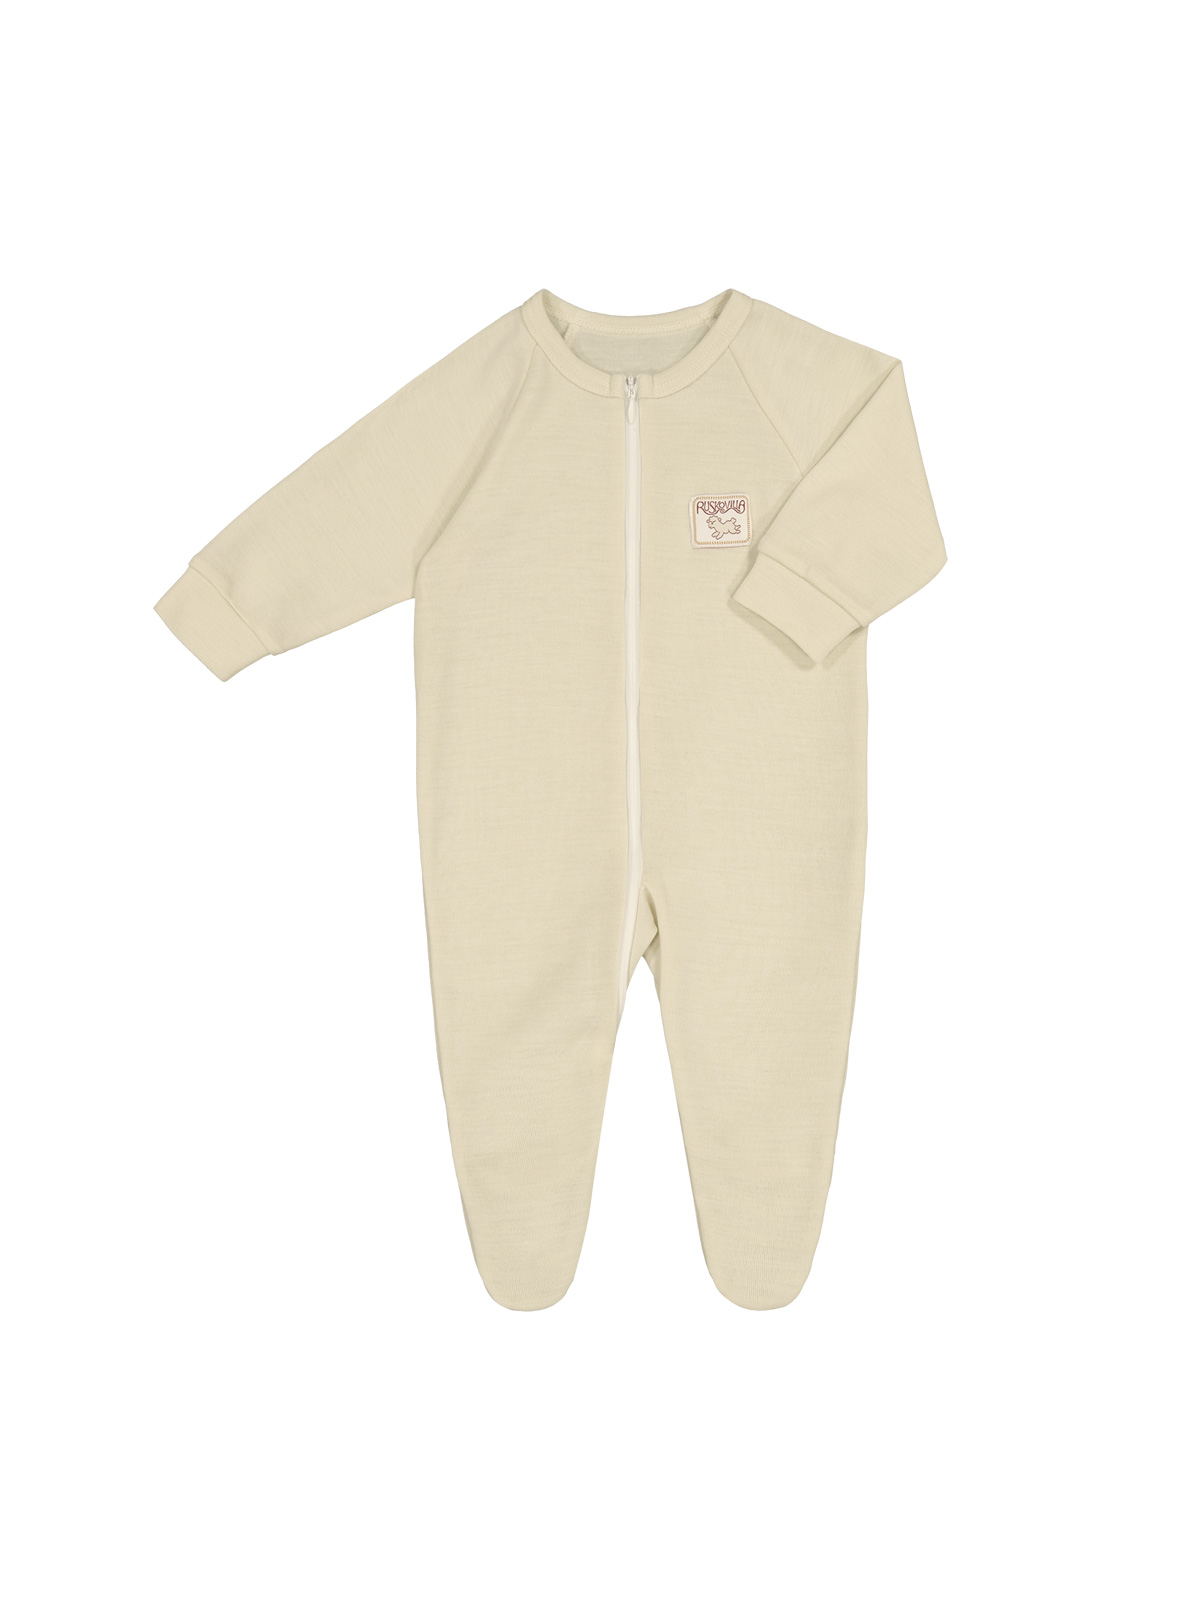 Ruskovilla's organic merino wool overalls for babies